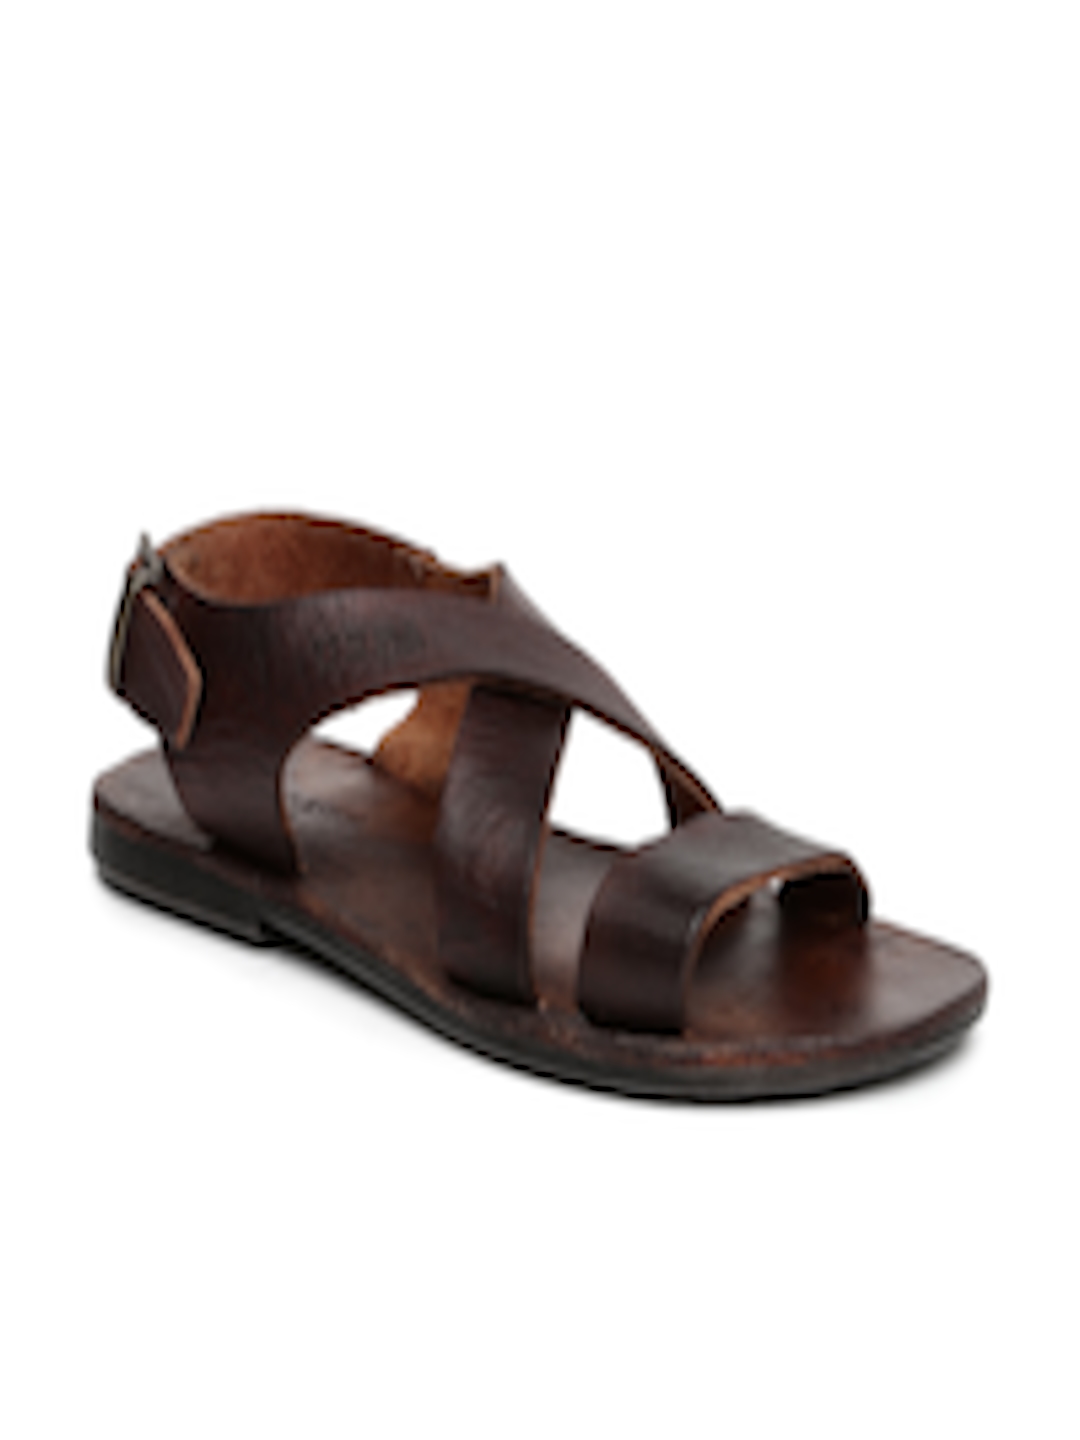 Buy U.S. Polo Assn. Men Brown Genuine Leather Sandals - Sandals for Men ...